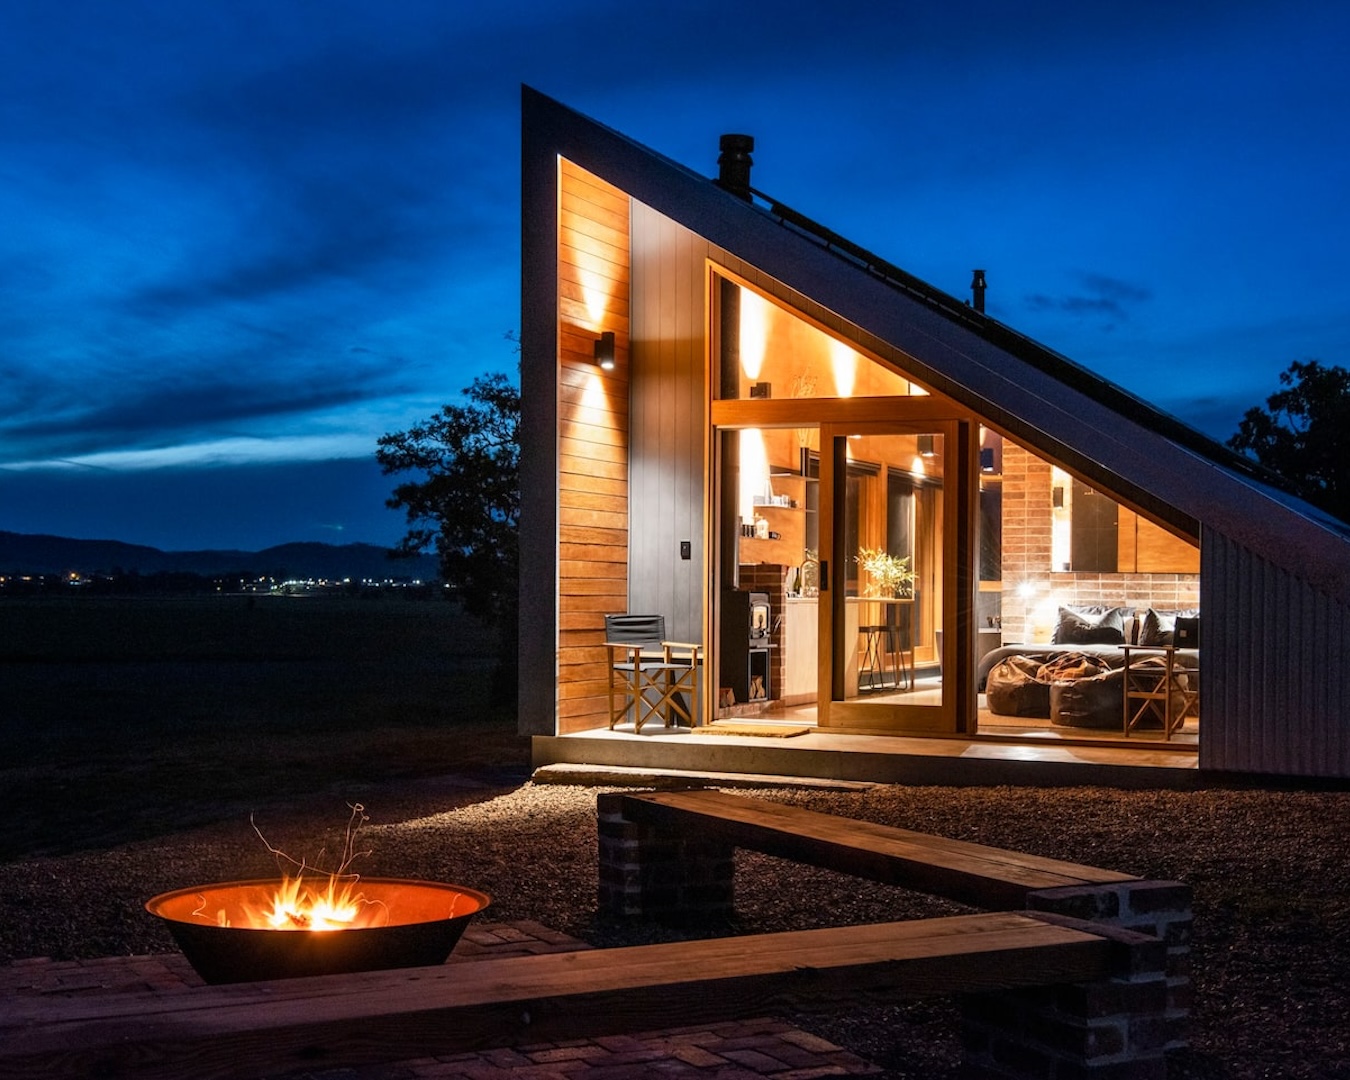 nsw fireplace airbnbs gawthorne's hut